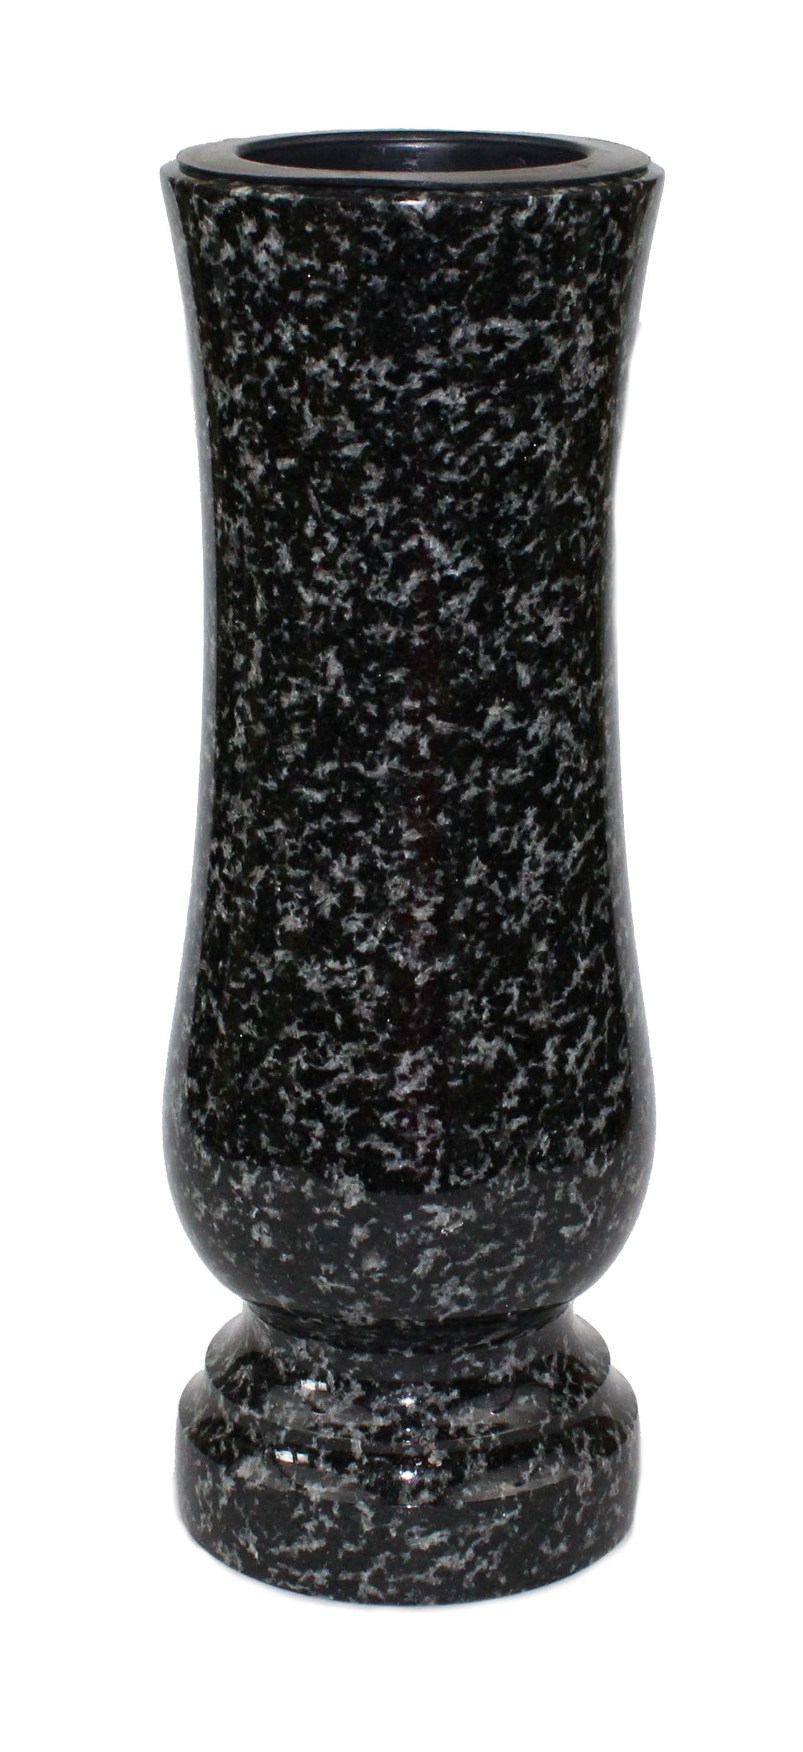 Náhrobná váza - žula / Regal black